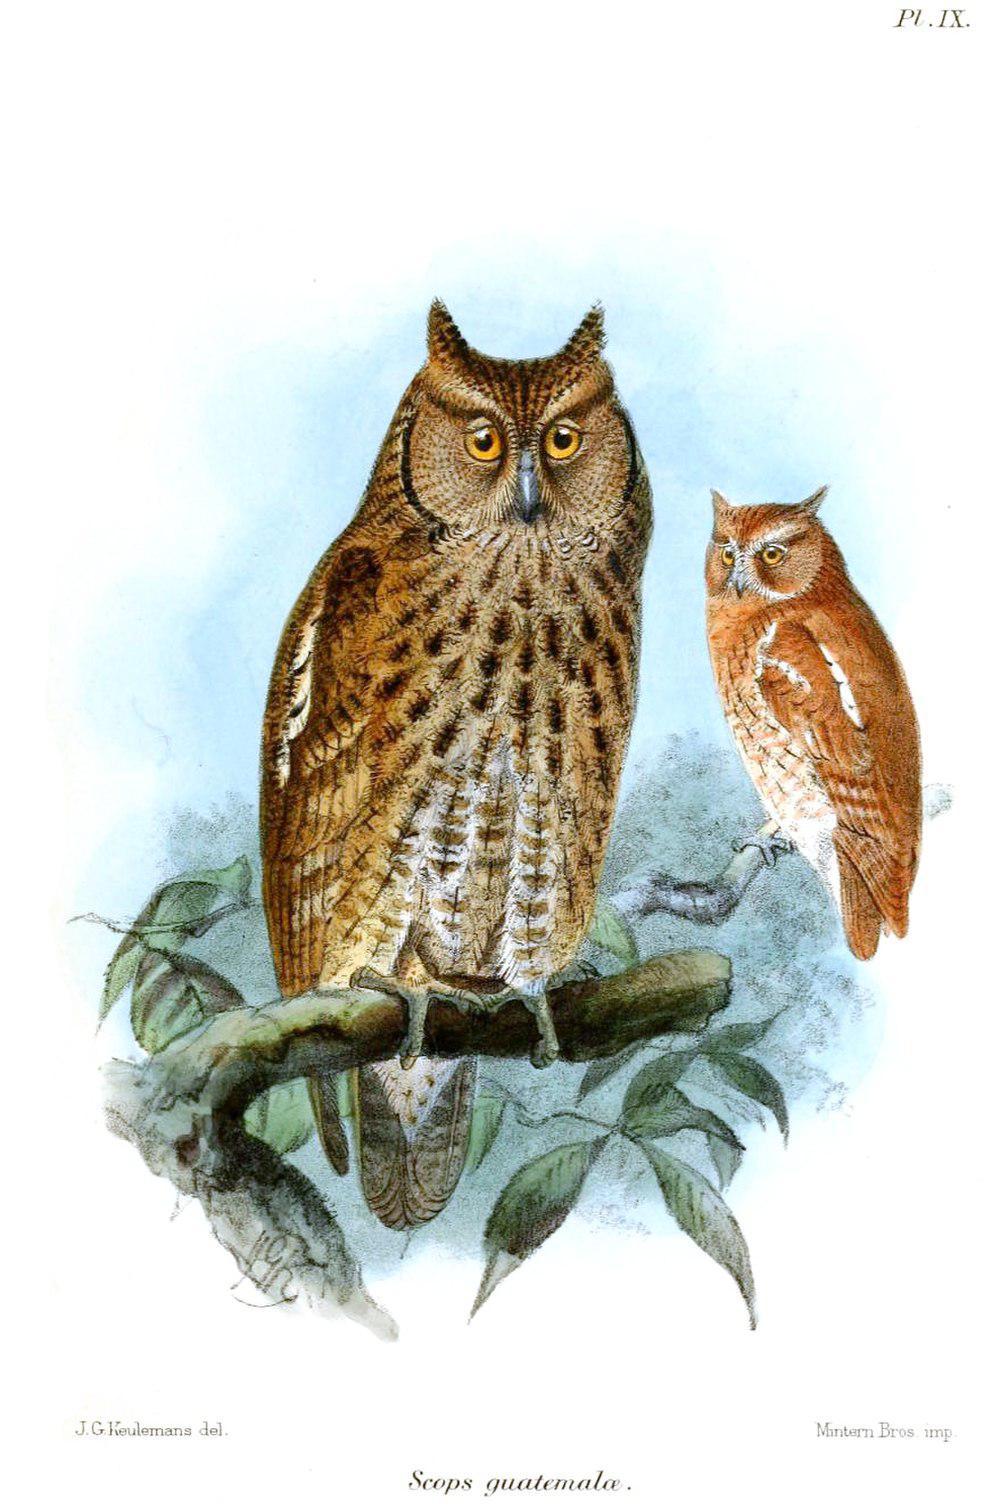 中美角鸮 / Middle American Screech Owl / Megascops guatemalae